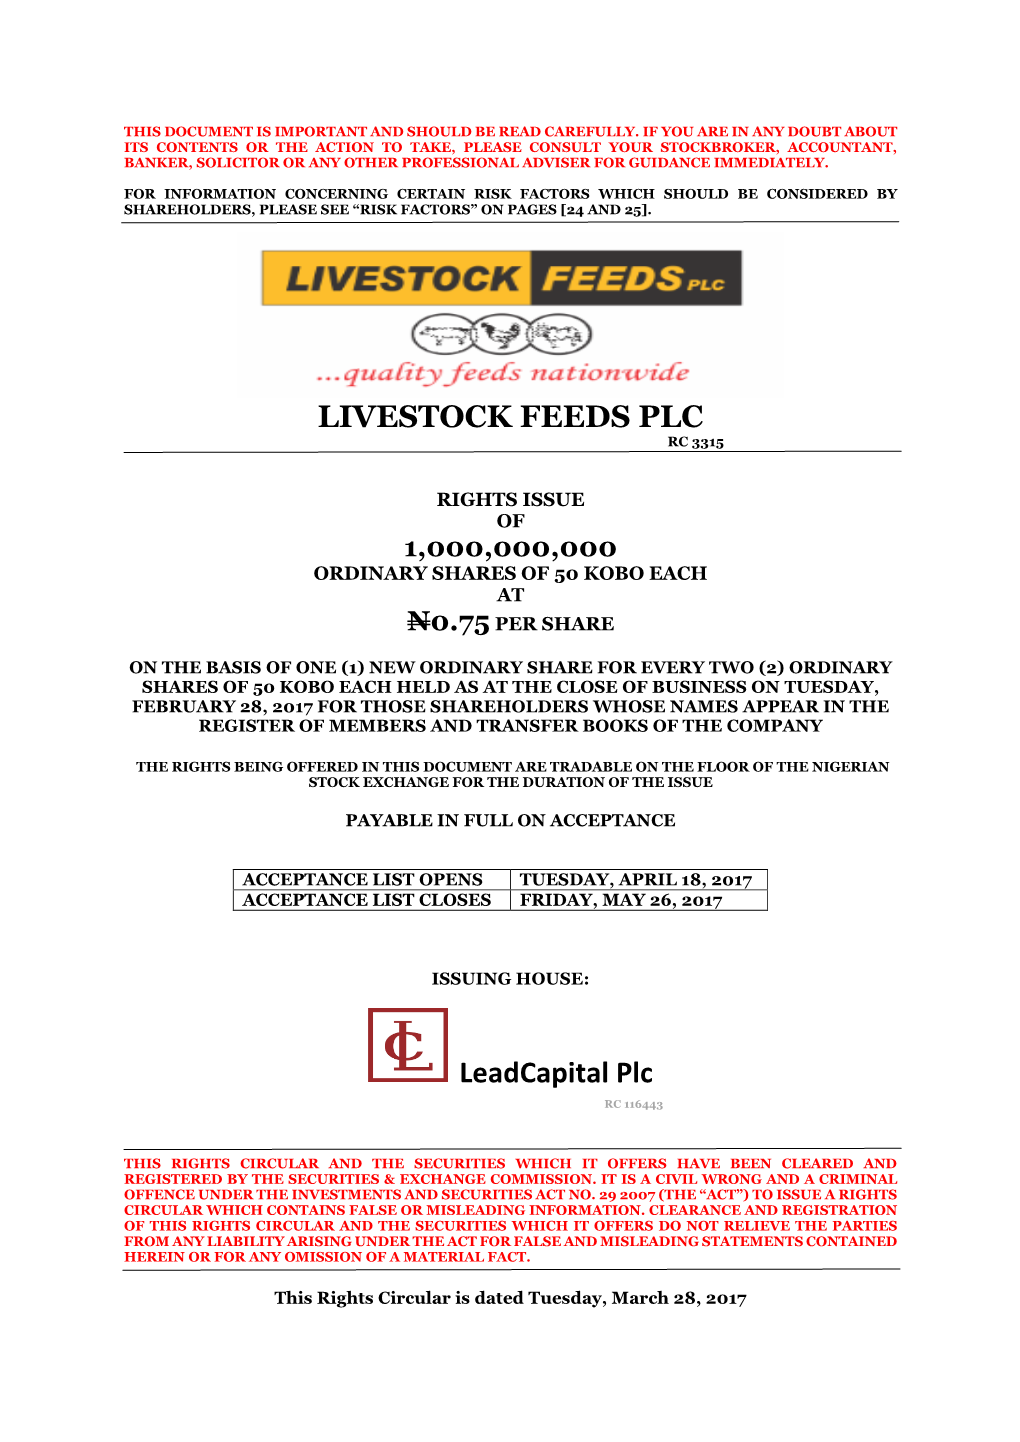 LIVESTOCK FEEDS PLC Leadcapital